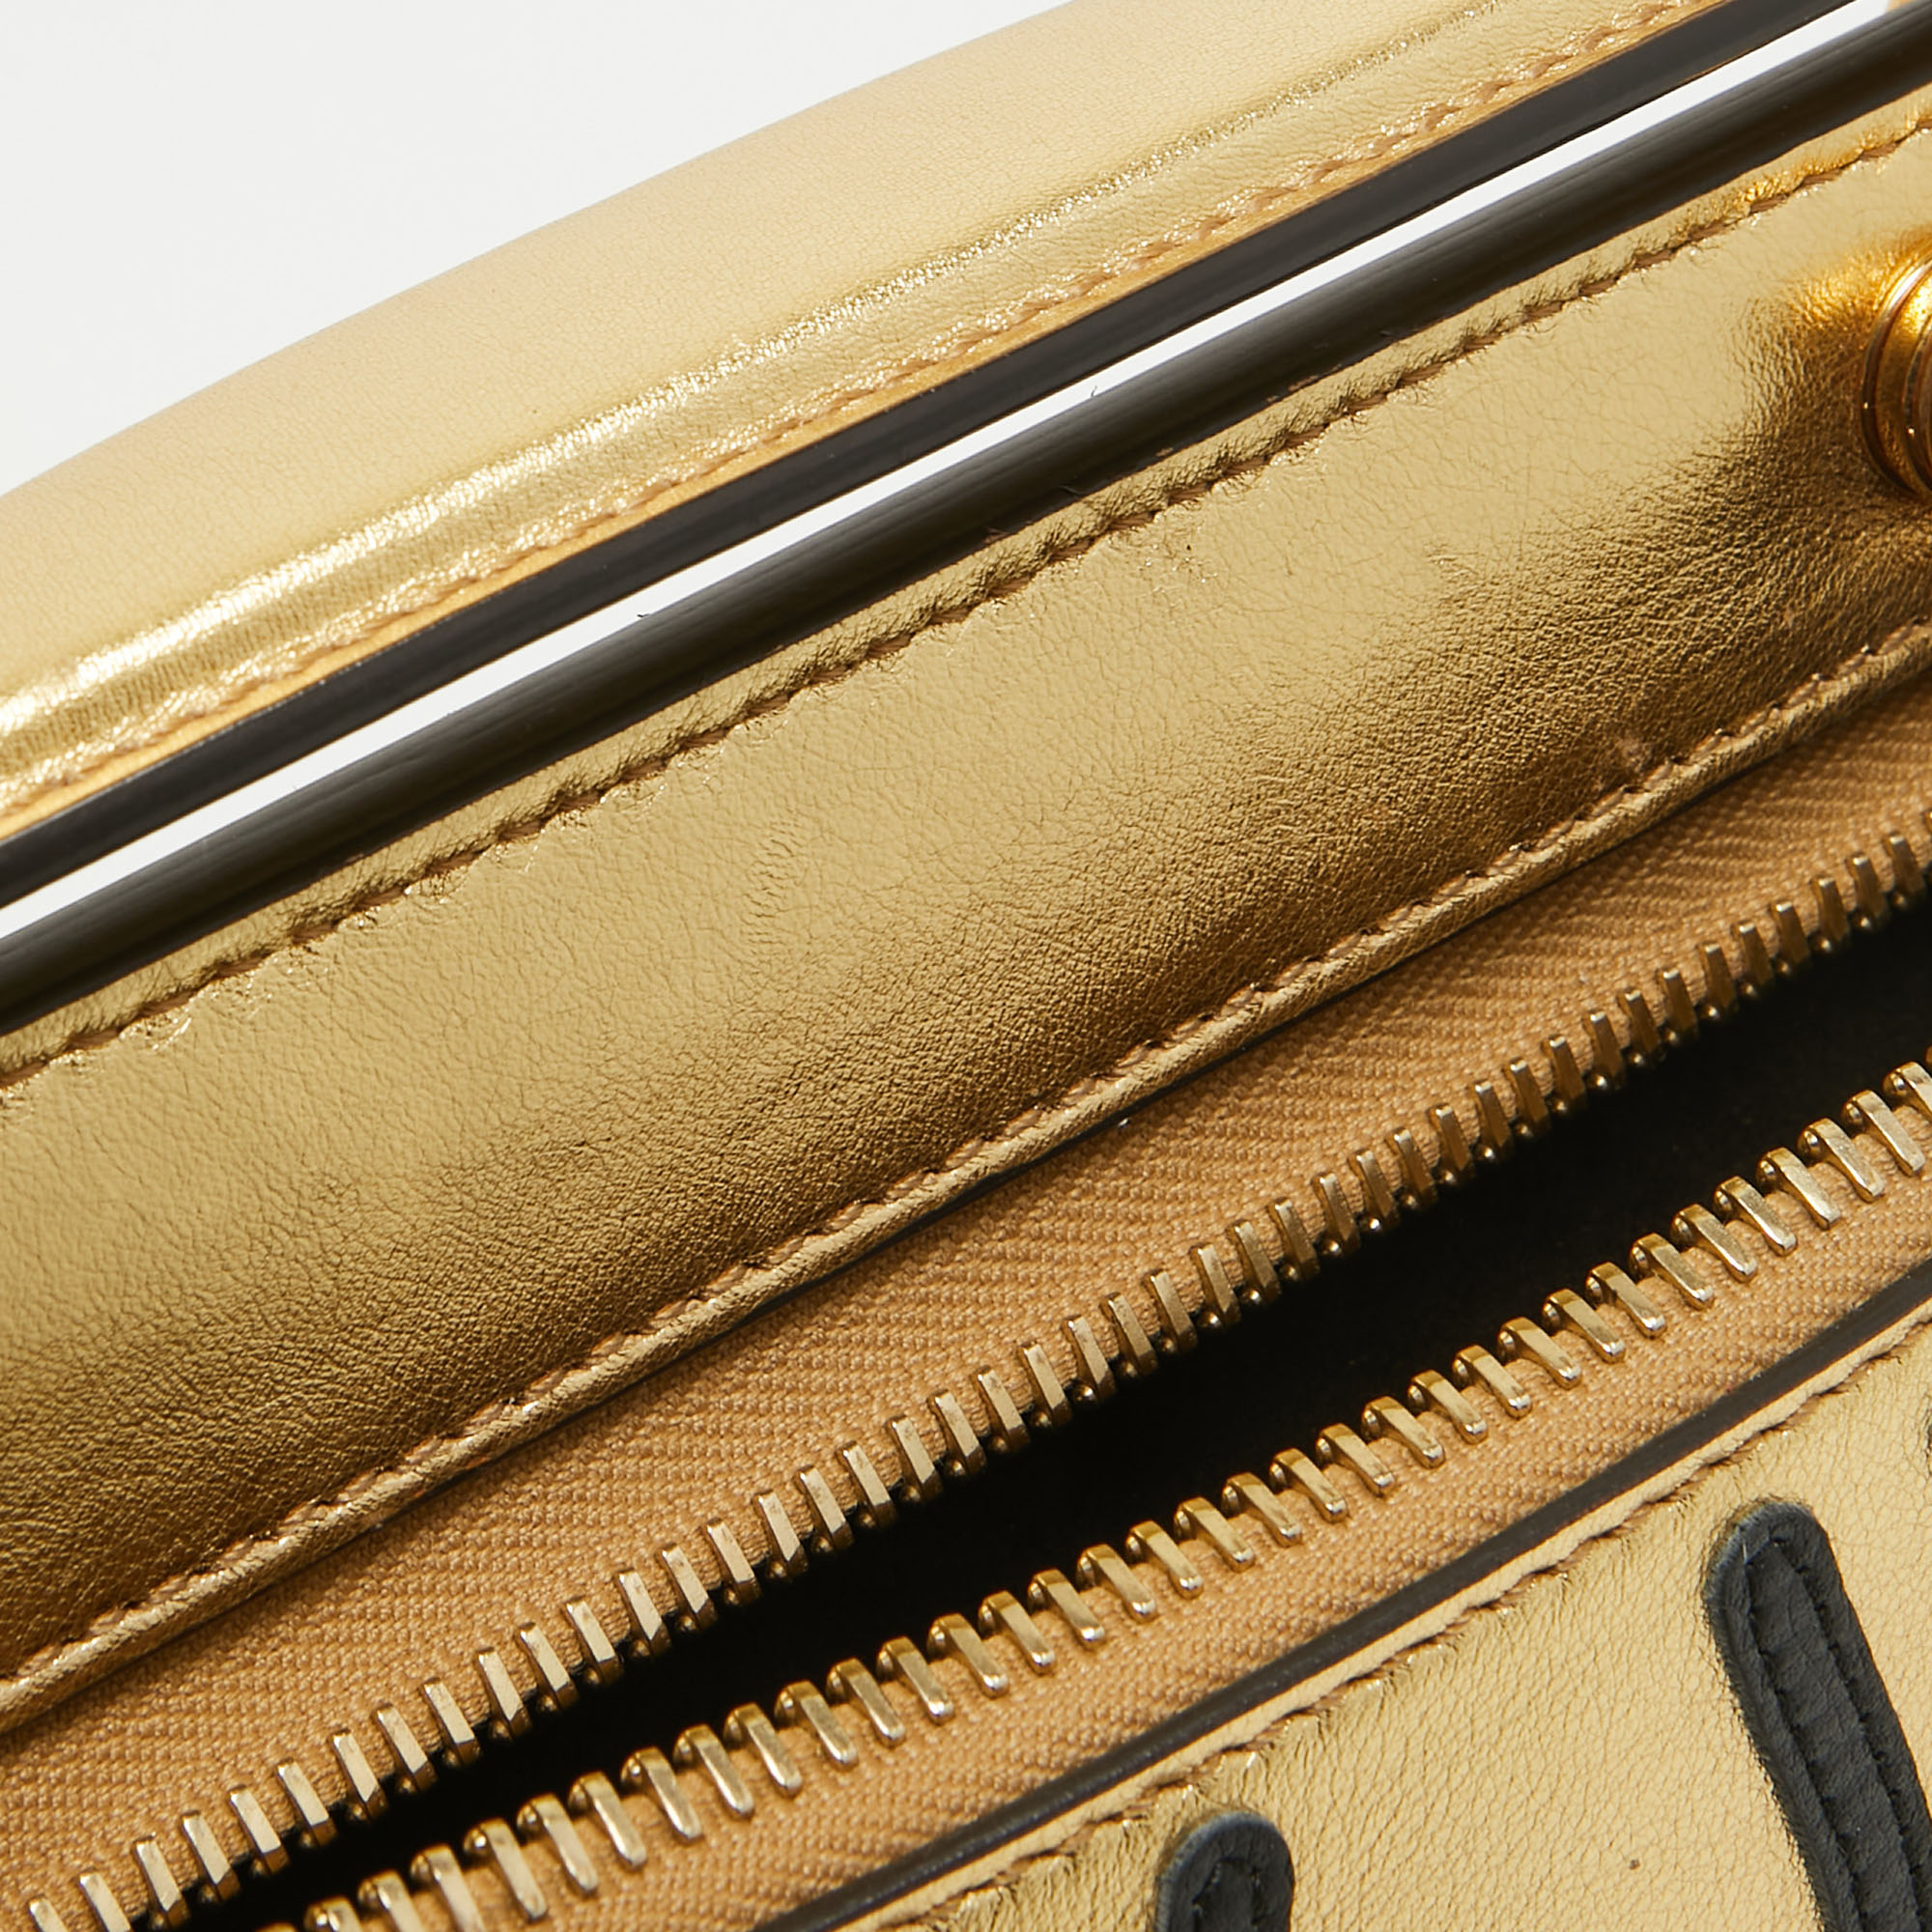 Fendi Gold/Black Leather Small Gold Edition Dotcom Click Top Handle Bag